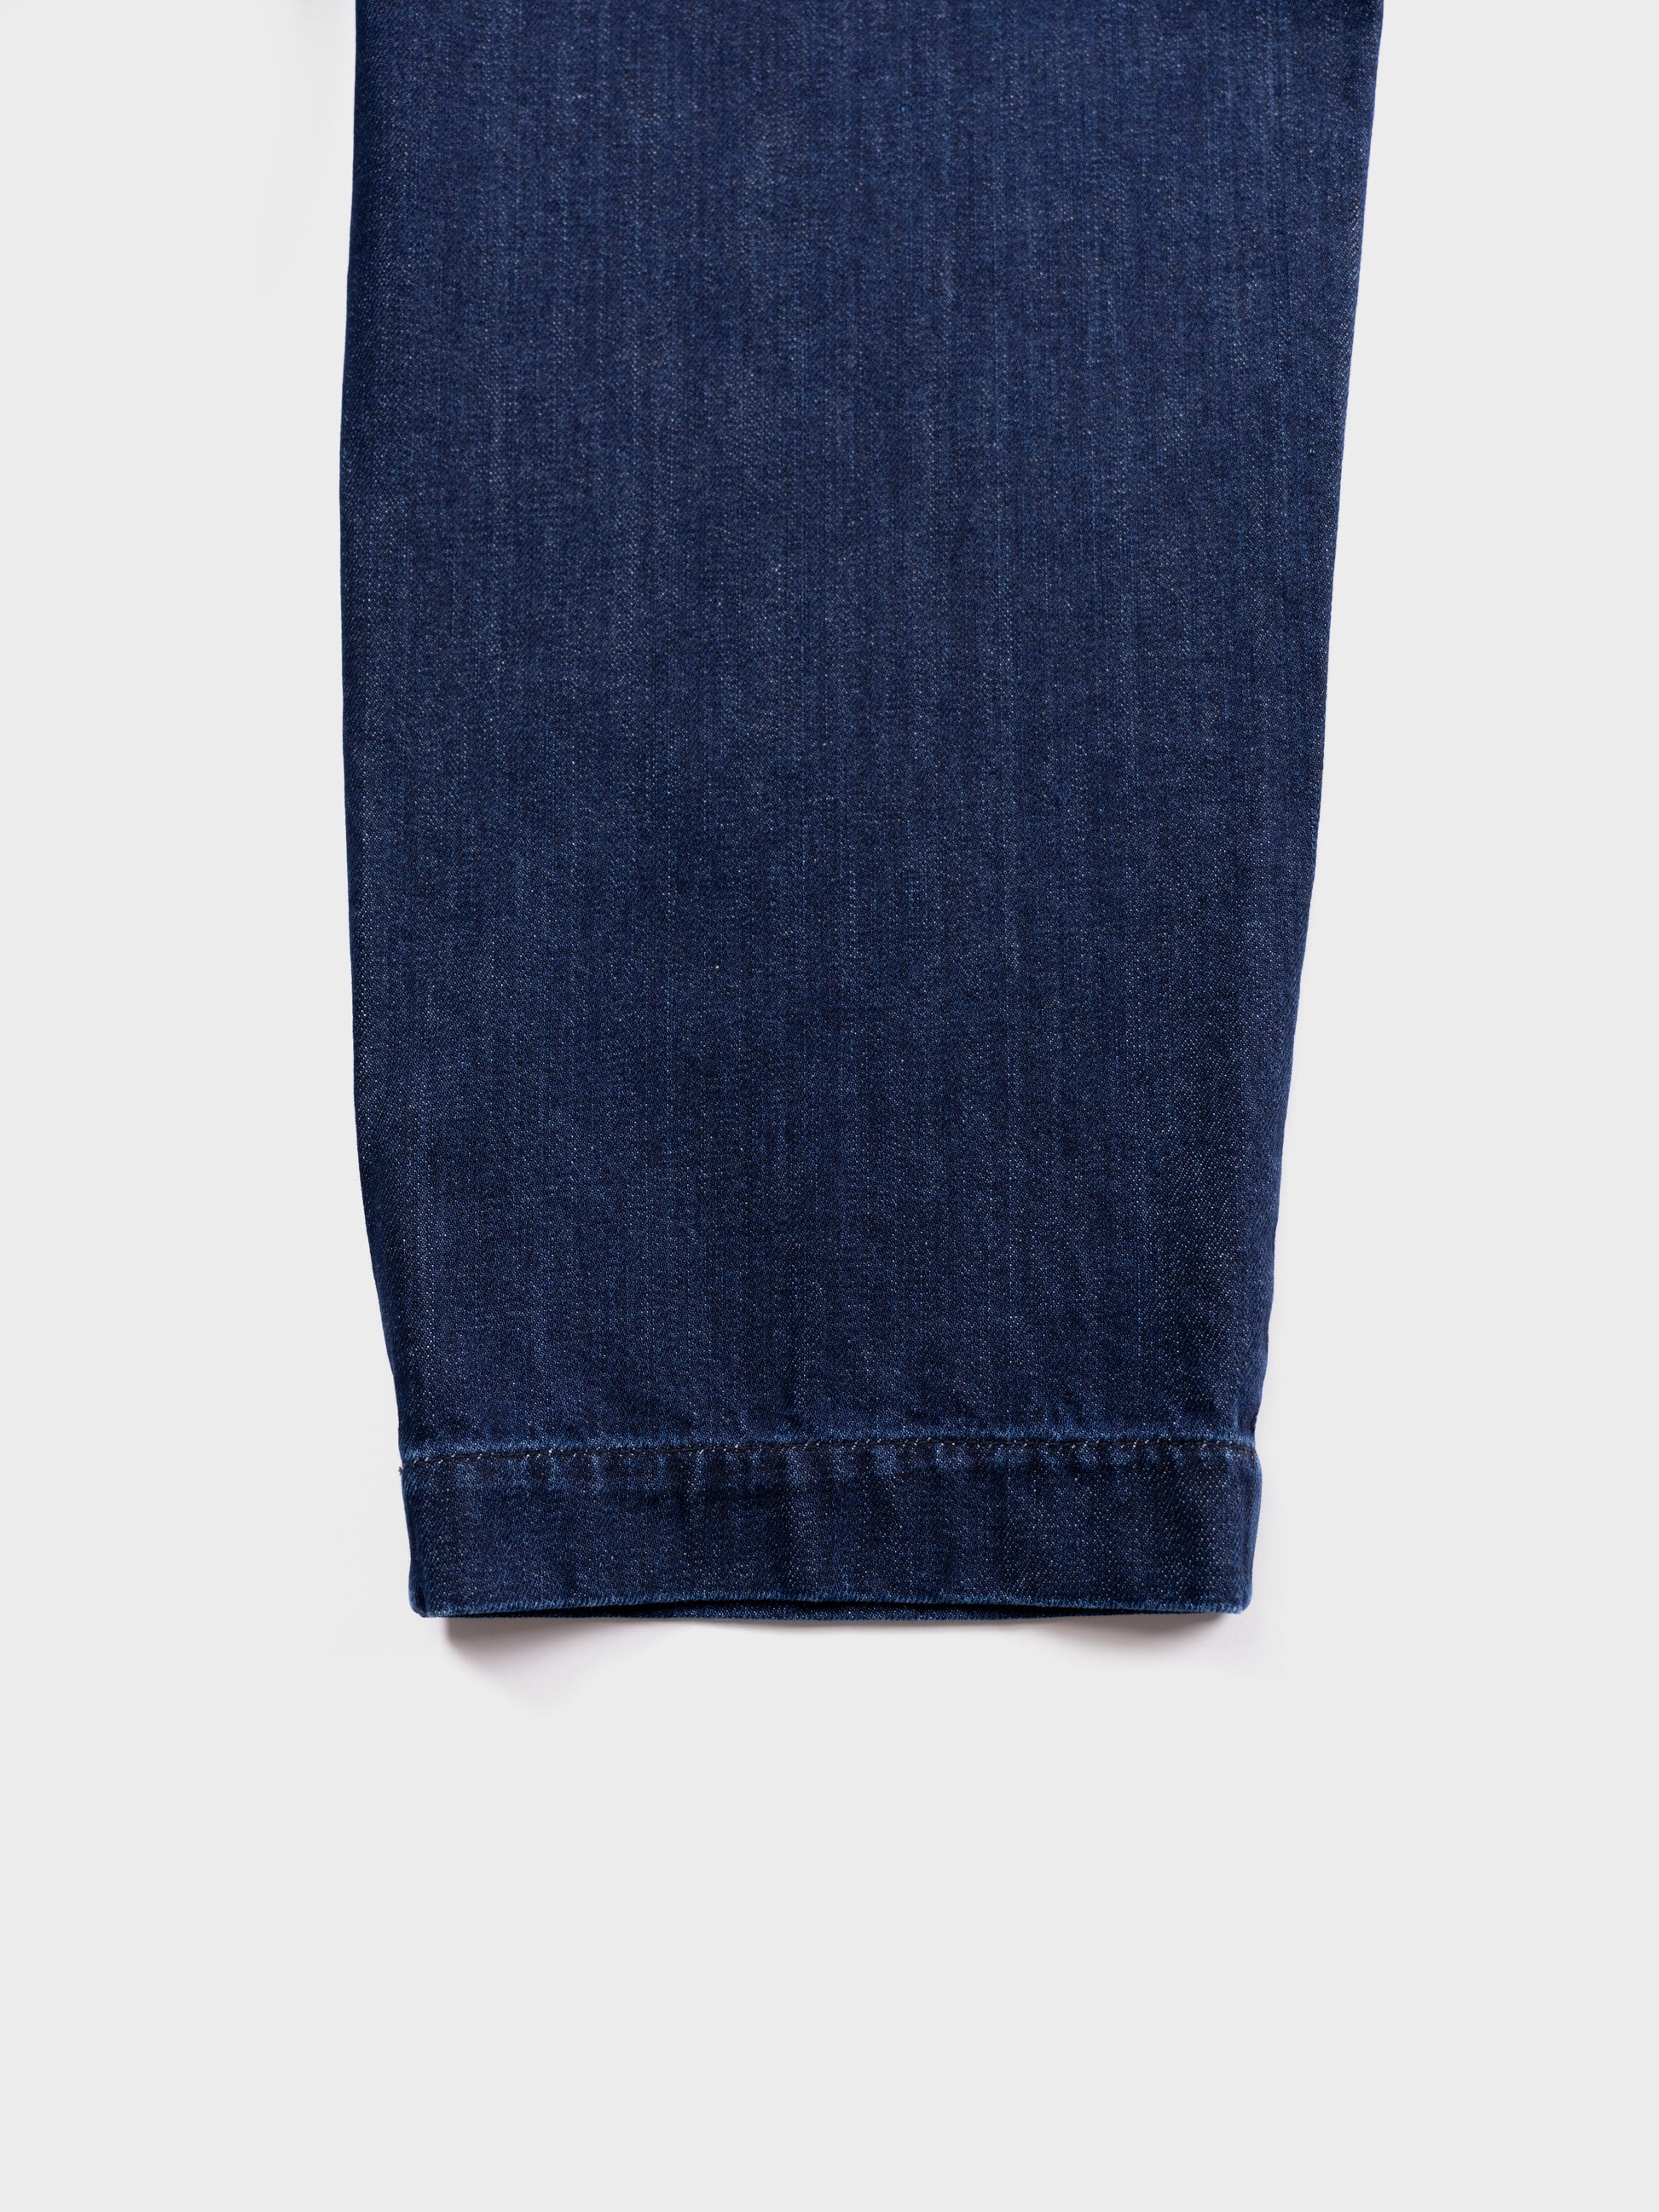 YMC Market Trouser - Indigo Denim Trouser